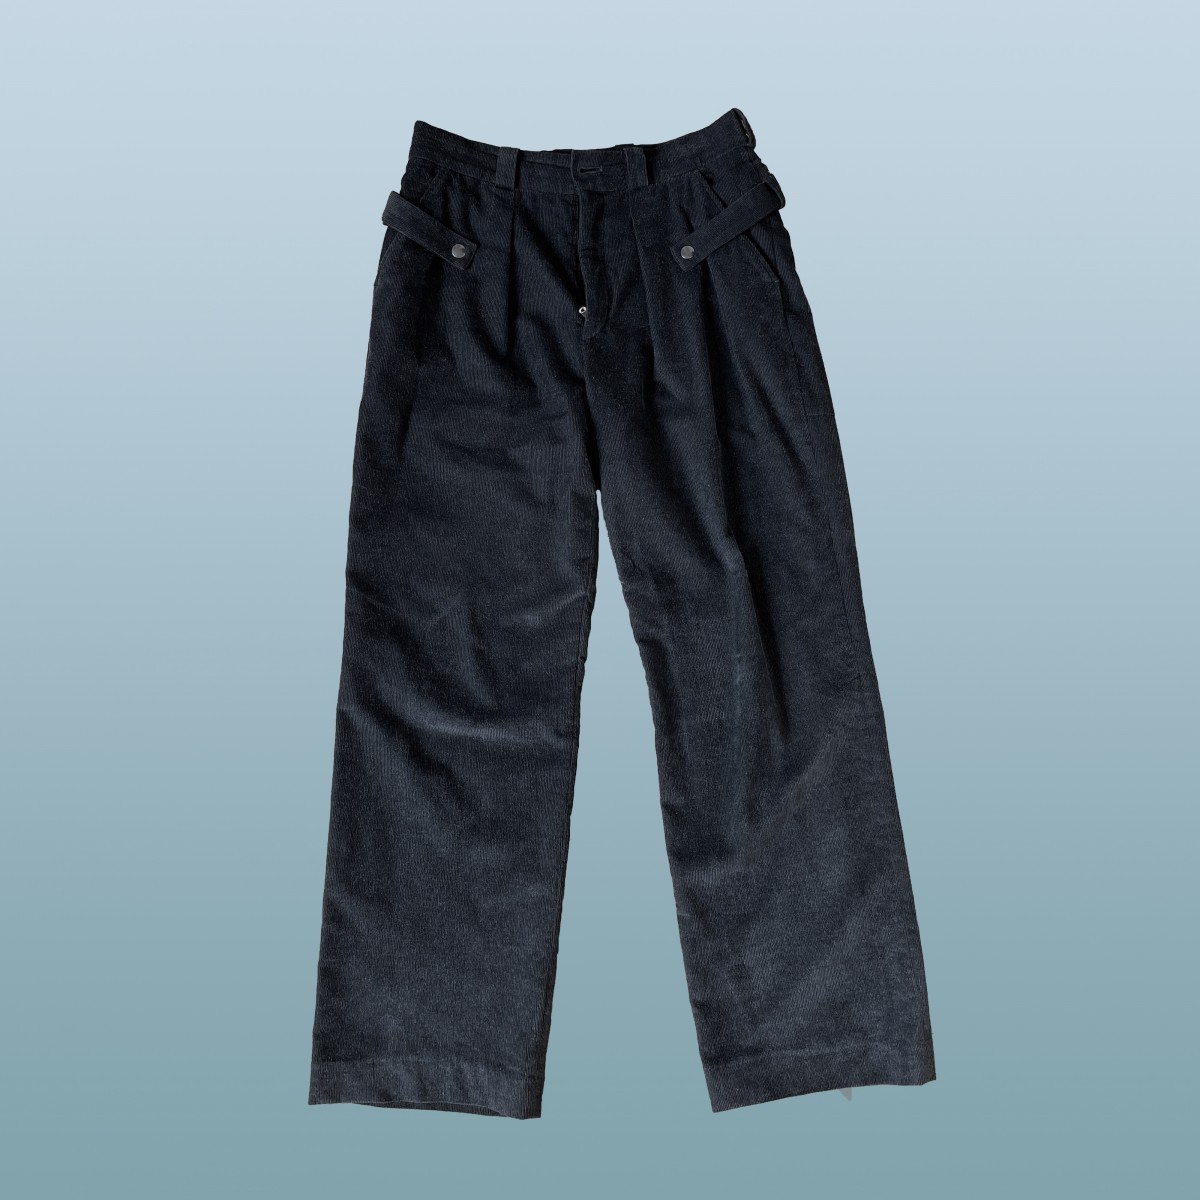 Yann Treated Corduroy pants (FW18) - 1